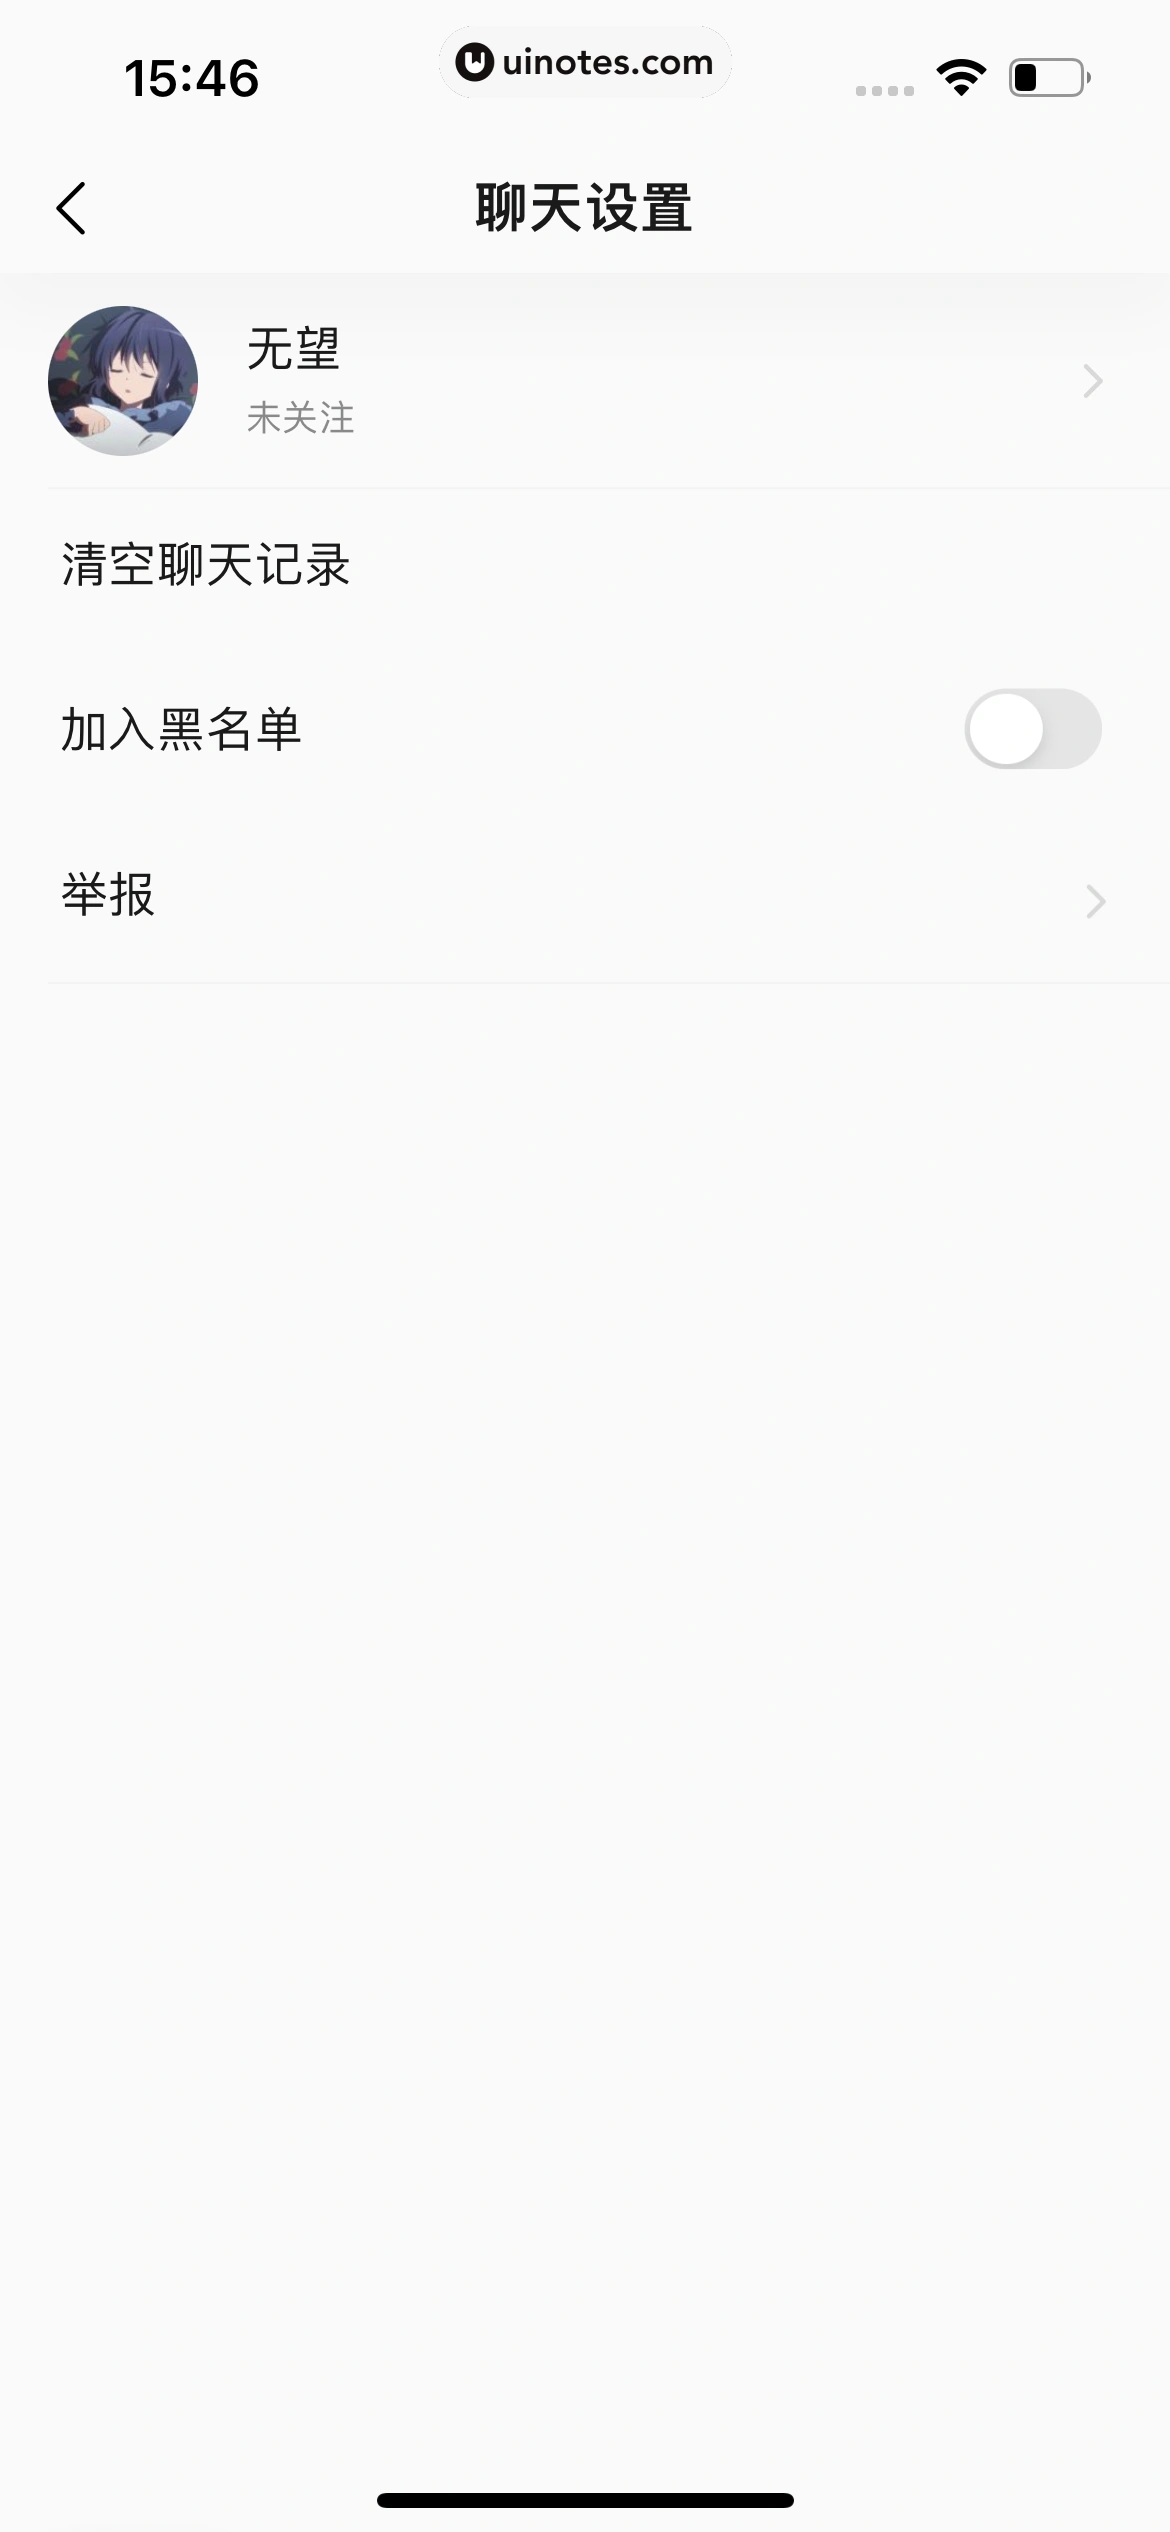 QQ音乐 App 截图 400 - UI Notes